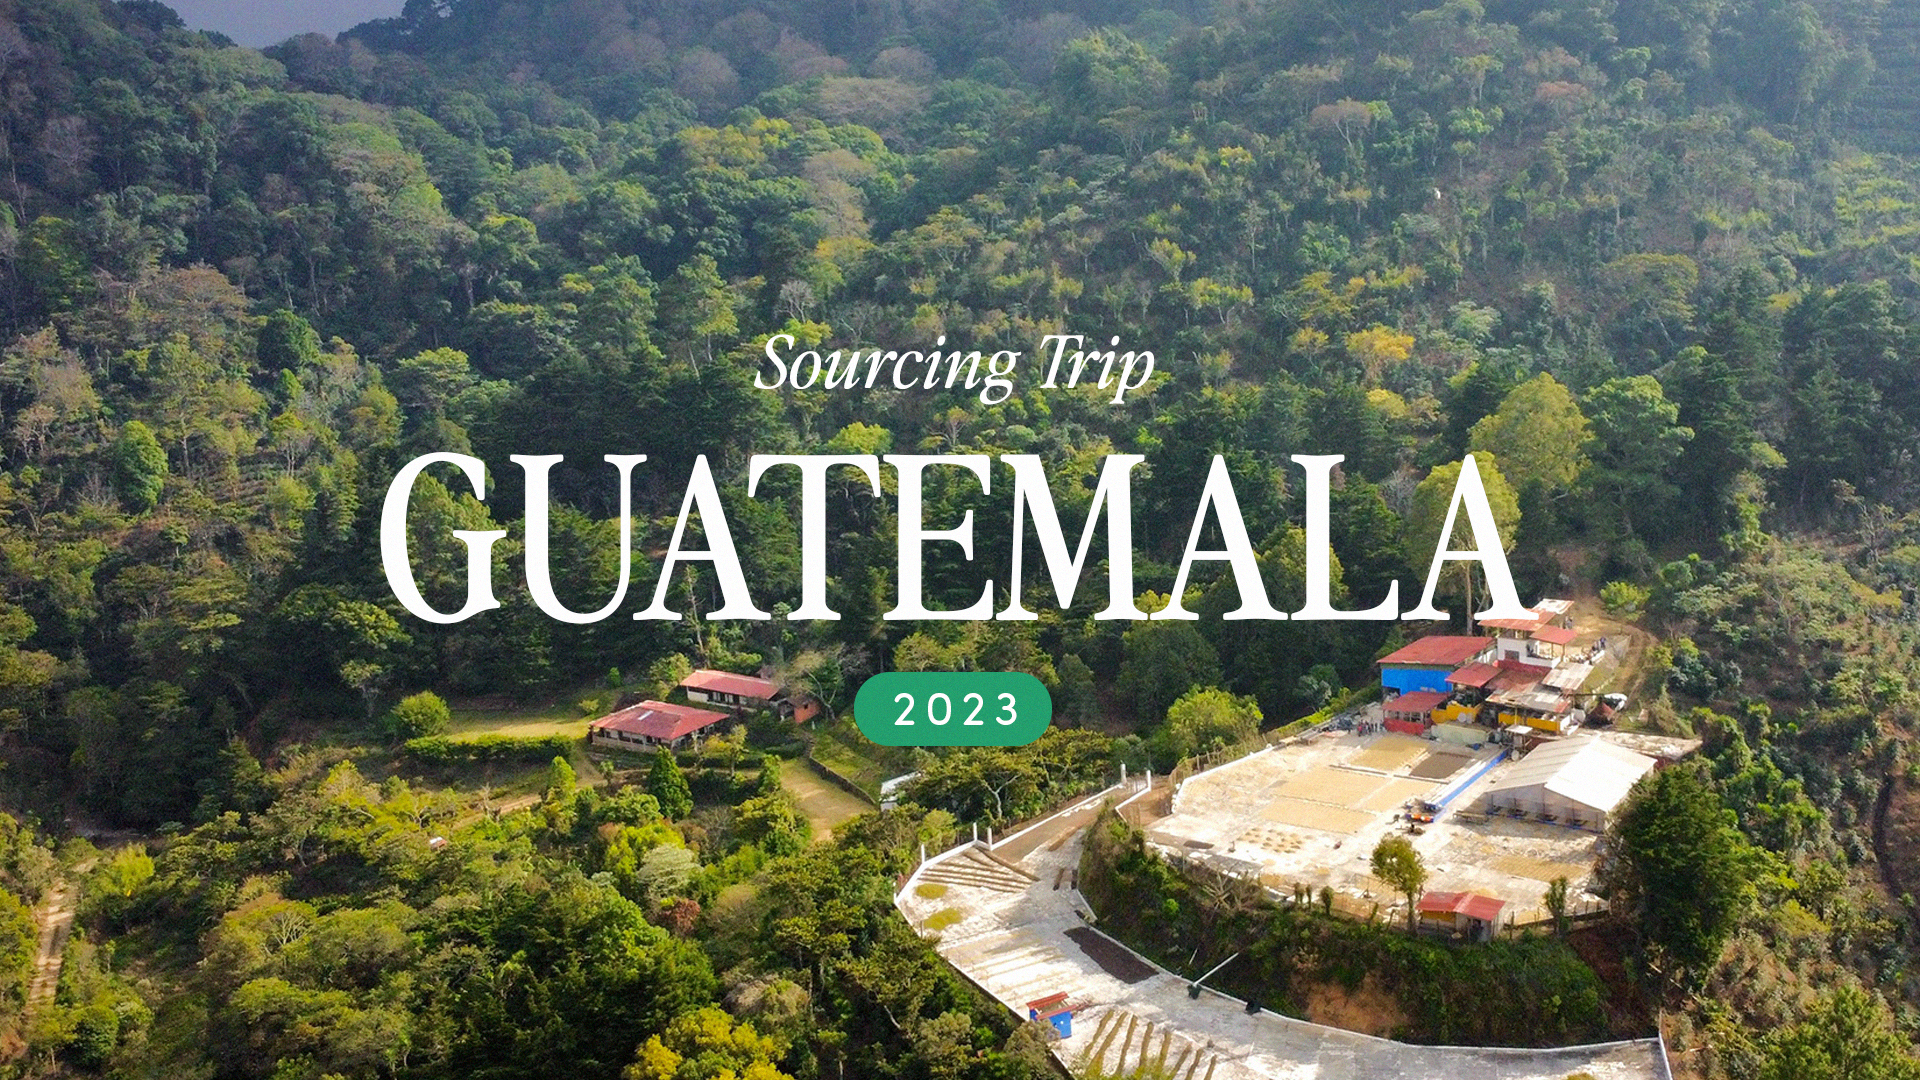 Guatemala Sourcing Trip 2023 